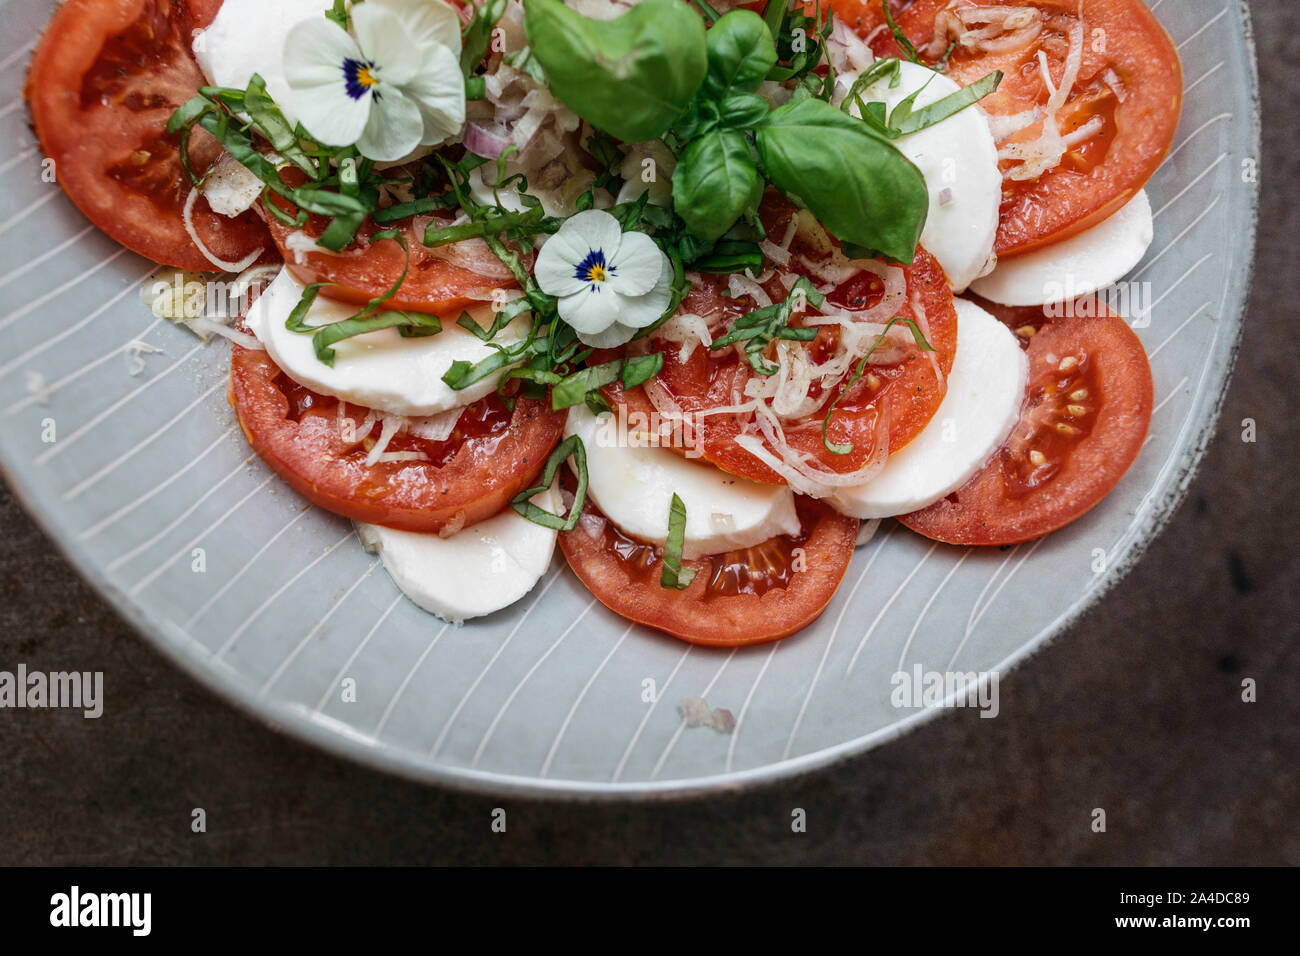 Mozzarella, tomato and basil salad with edible violets Stock Photo